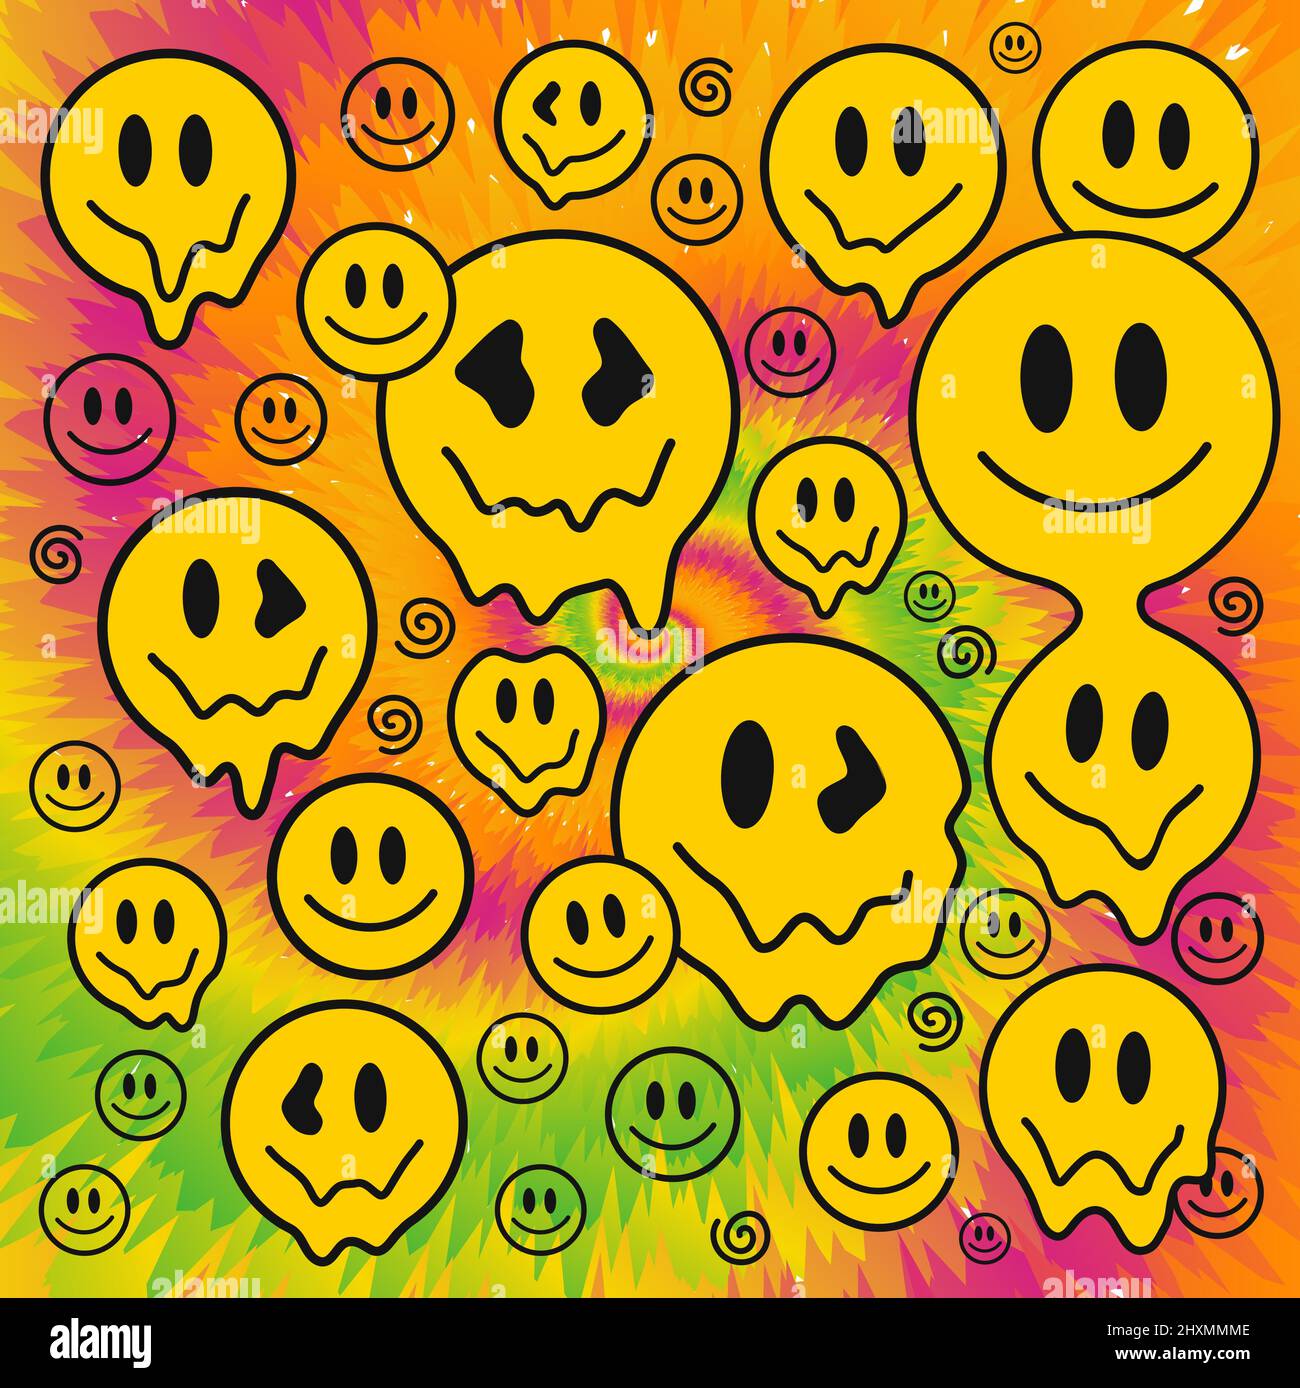 Crazy melt smile faces,tie dye background.Vector tie dye crazy cartoon character illustration.Smile faces,60s melting acid,trippy,tiedye backgroun,pattern,wallpaper print concept Stock Vector